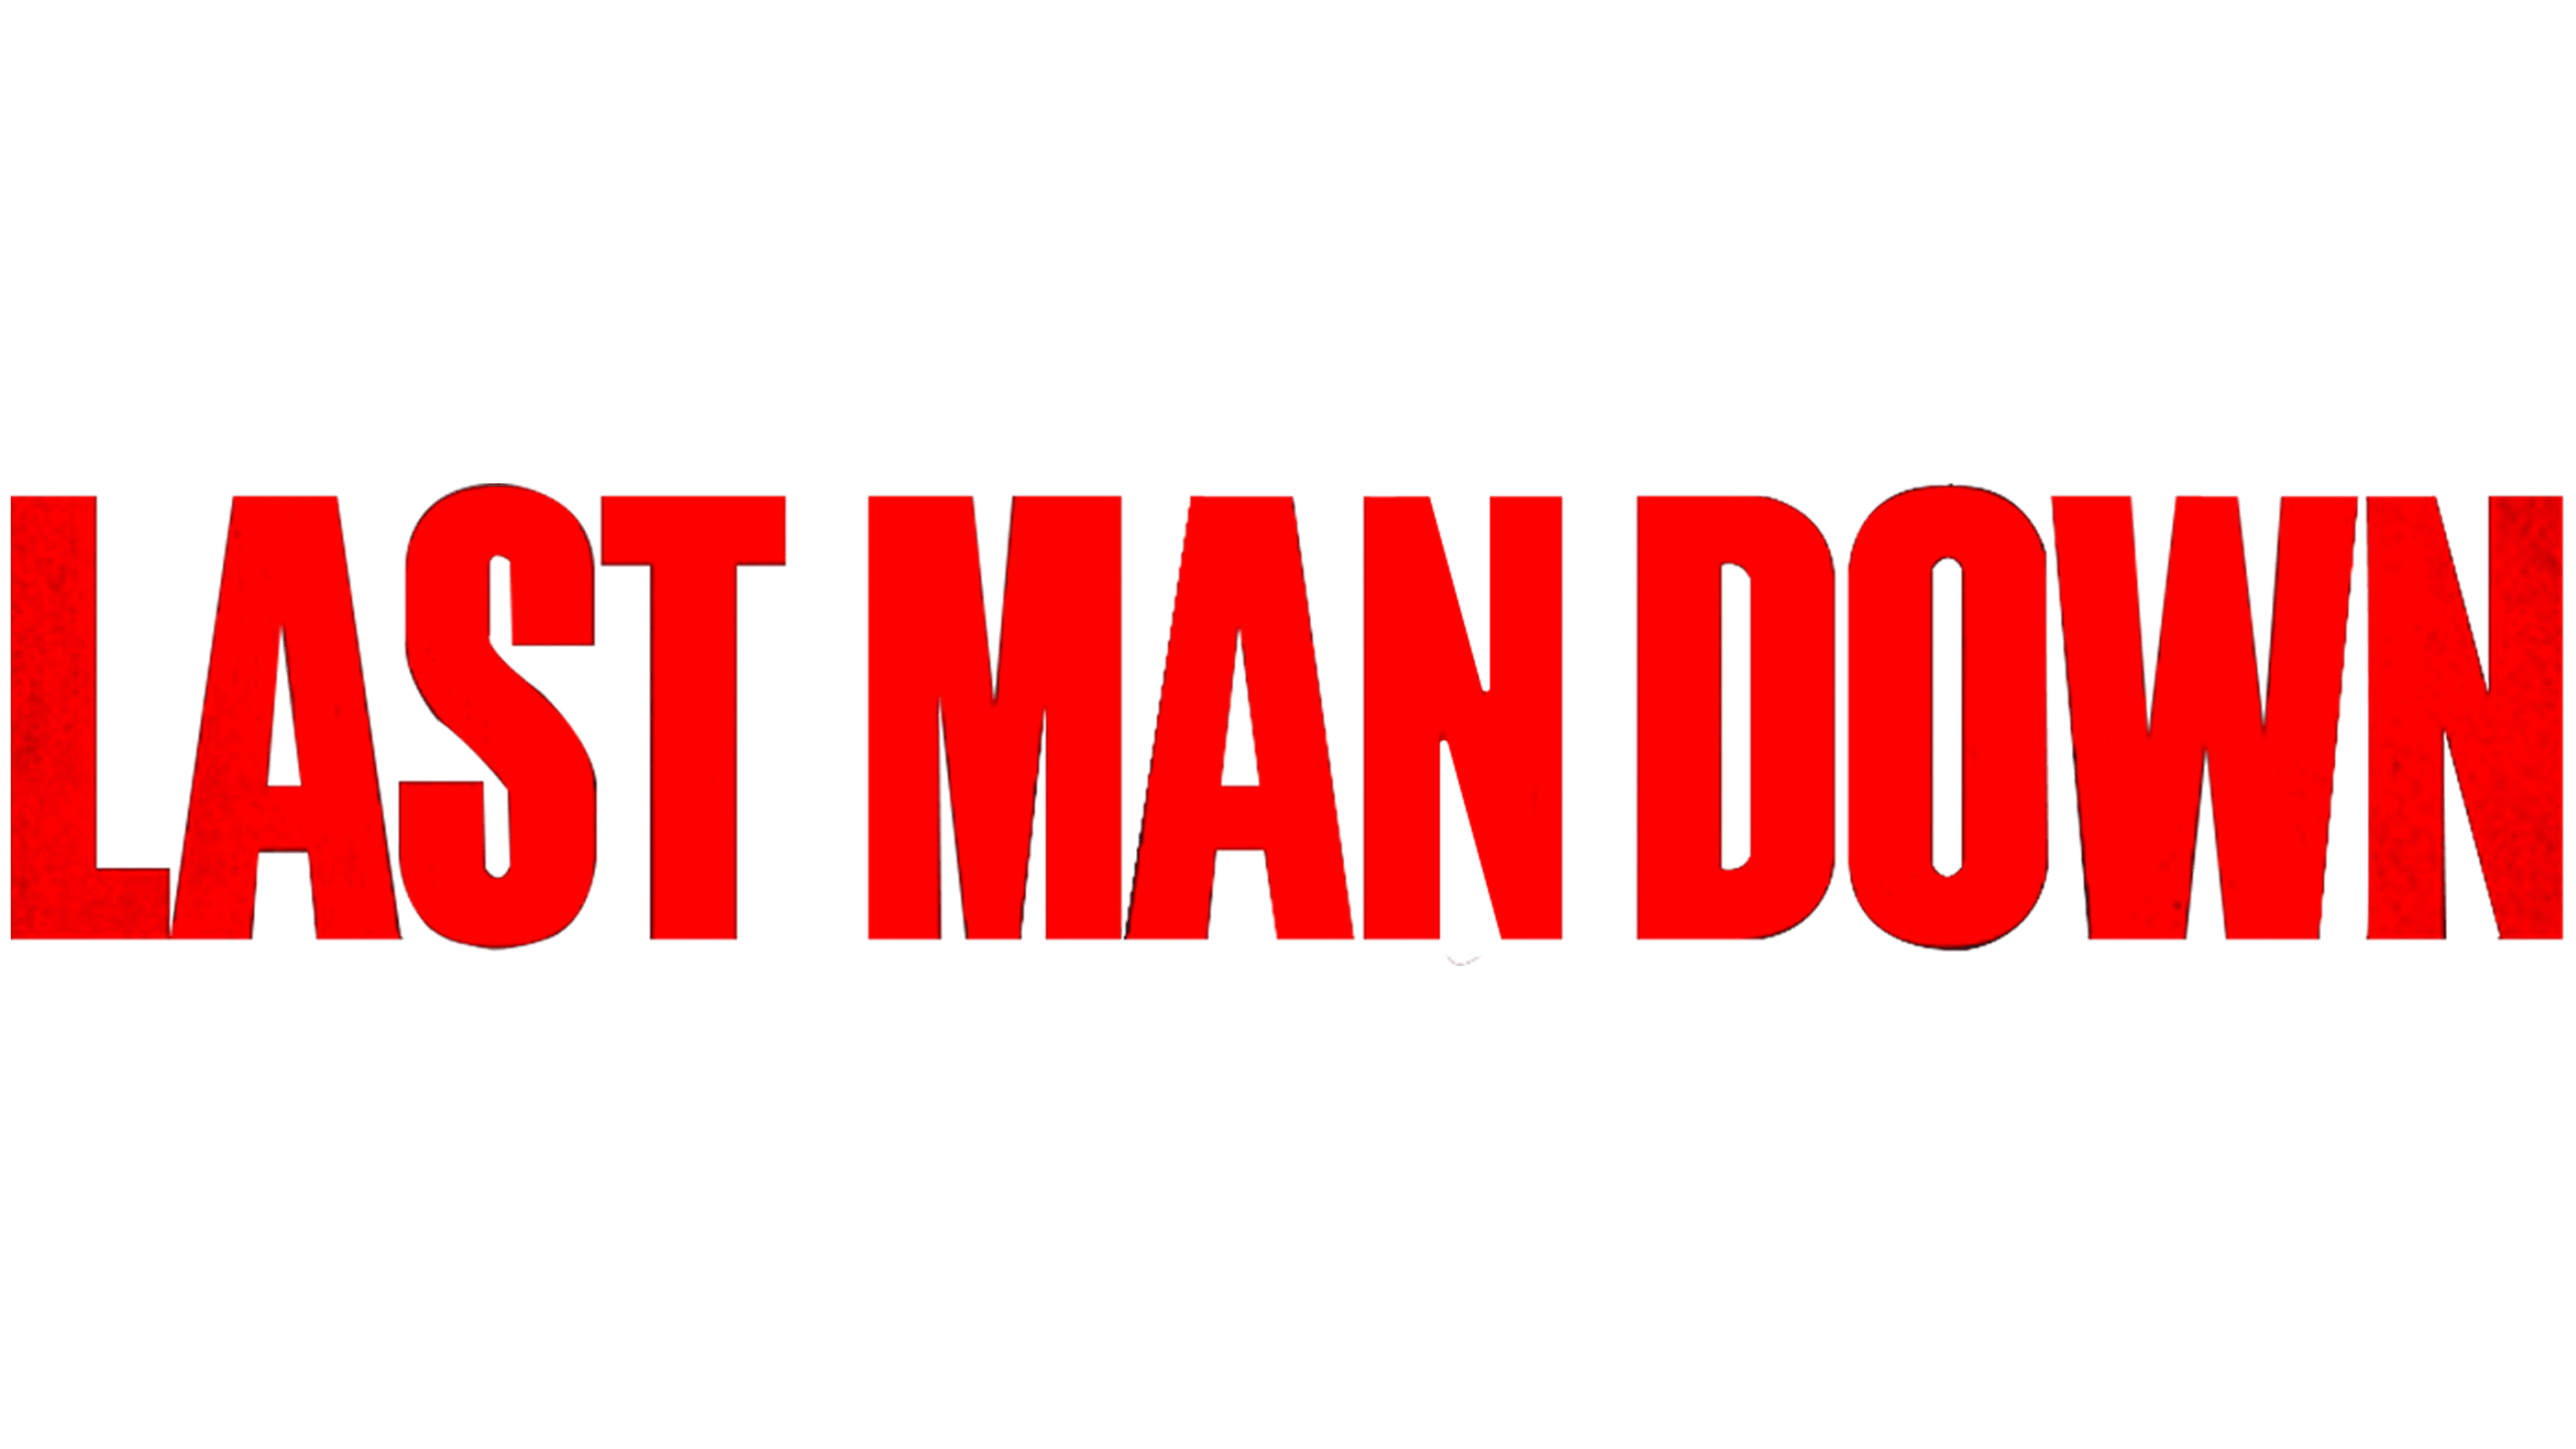 Last Man Down